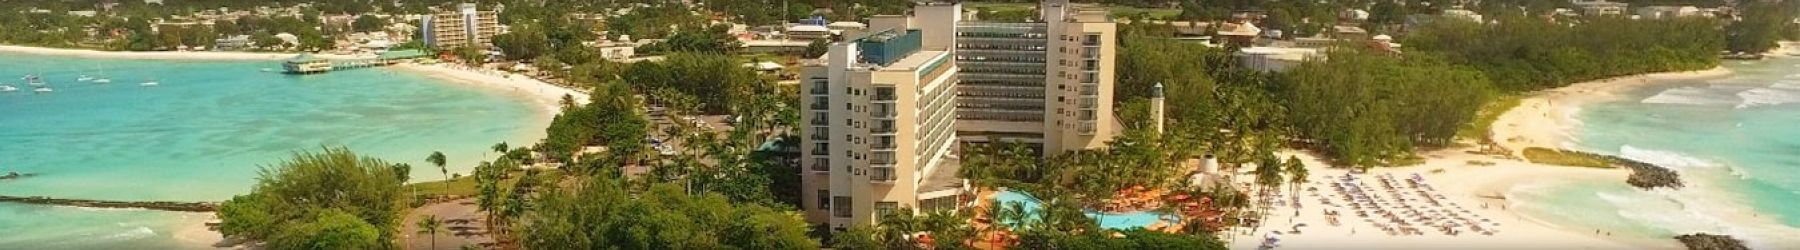 Hilton Barbados Resort - 5*